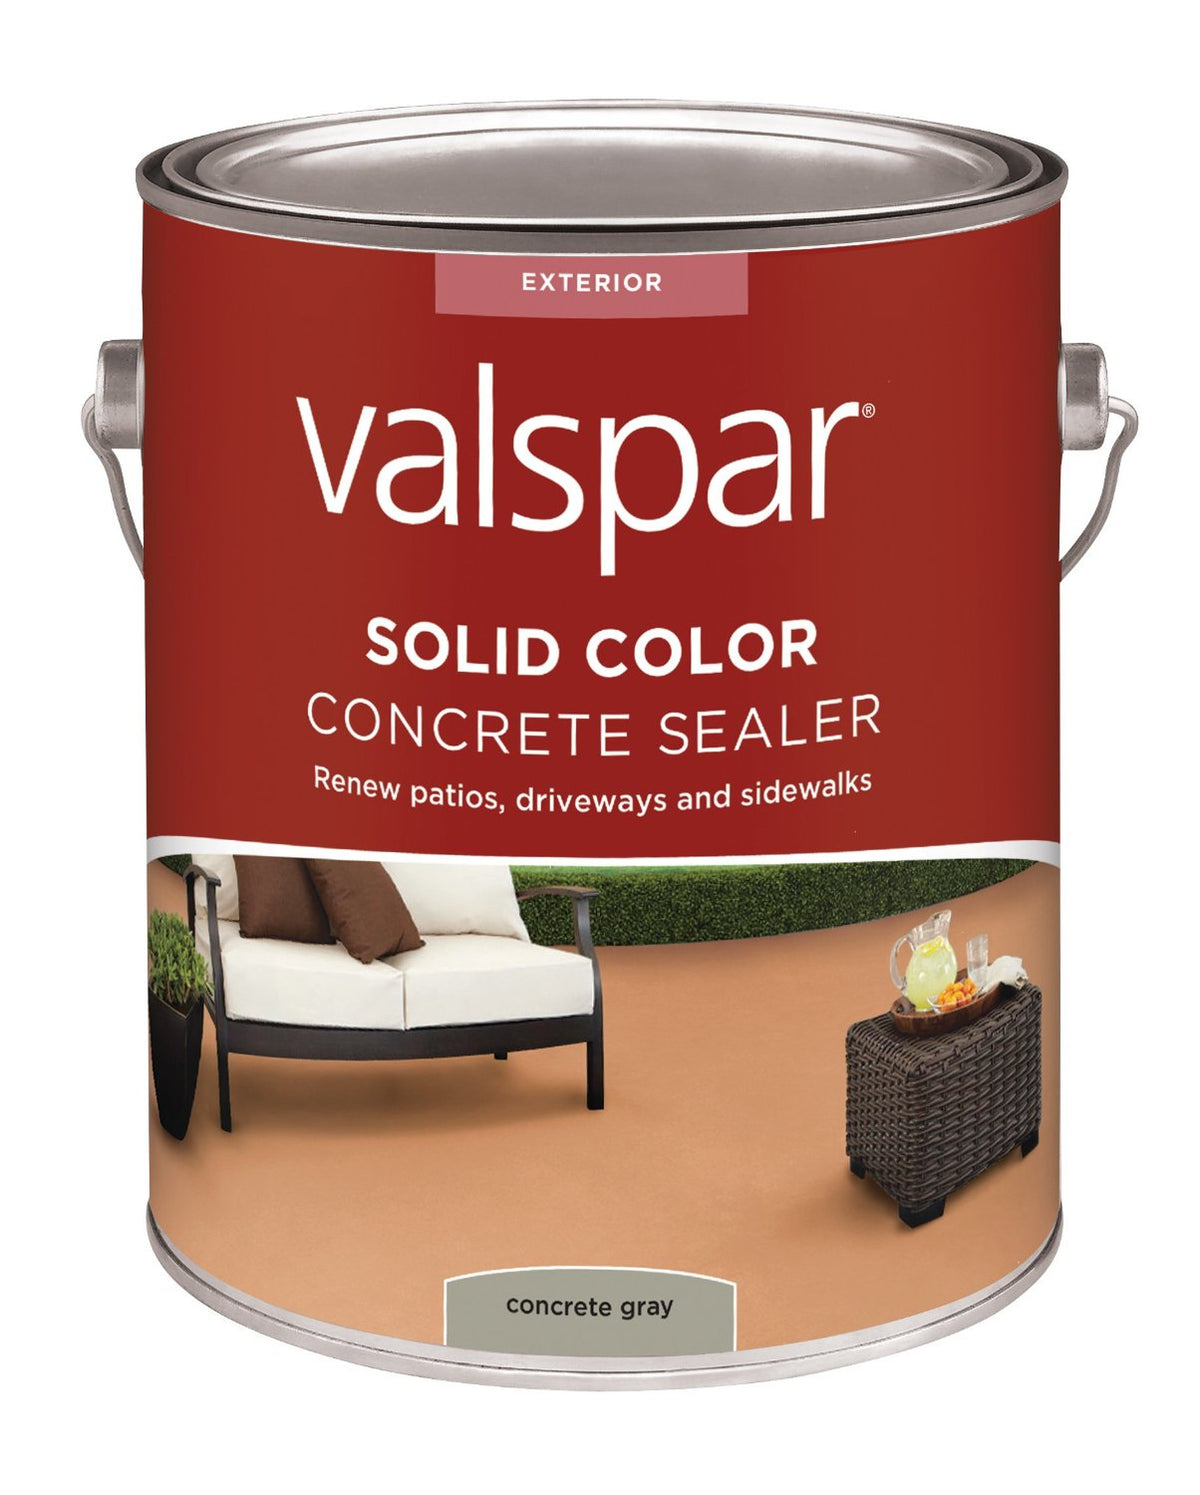 buy masonry sealers at cheap rate in bulk. wholesale & retail bulk paint supplies store. home décor ideas, maintenance, repair replacement parts